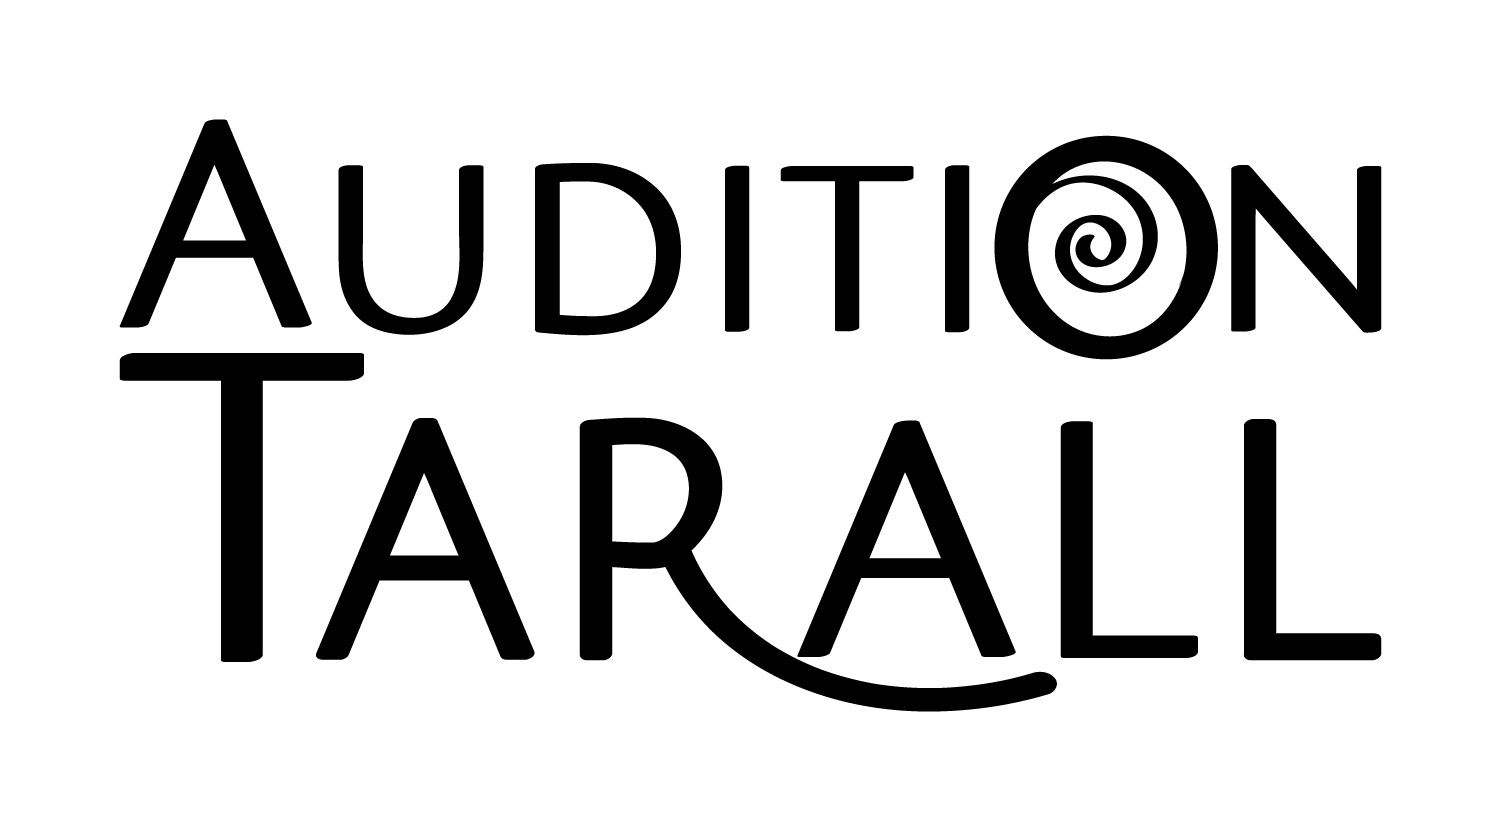 audition-tarall-logo-typographique-black-cmyk-1500px-w-300ppi